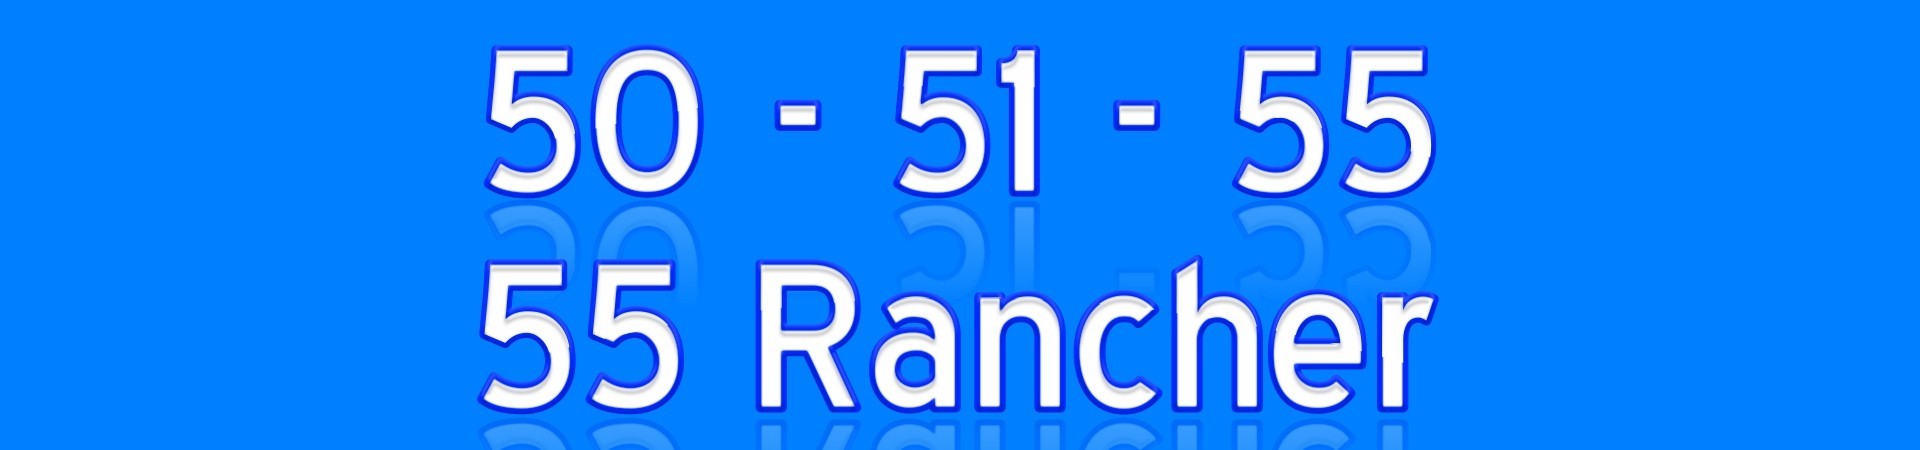 50 51 55 55 Rancher